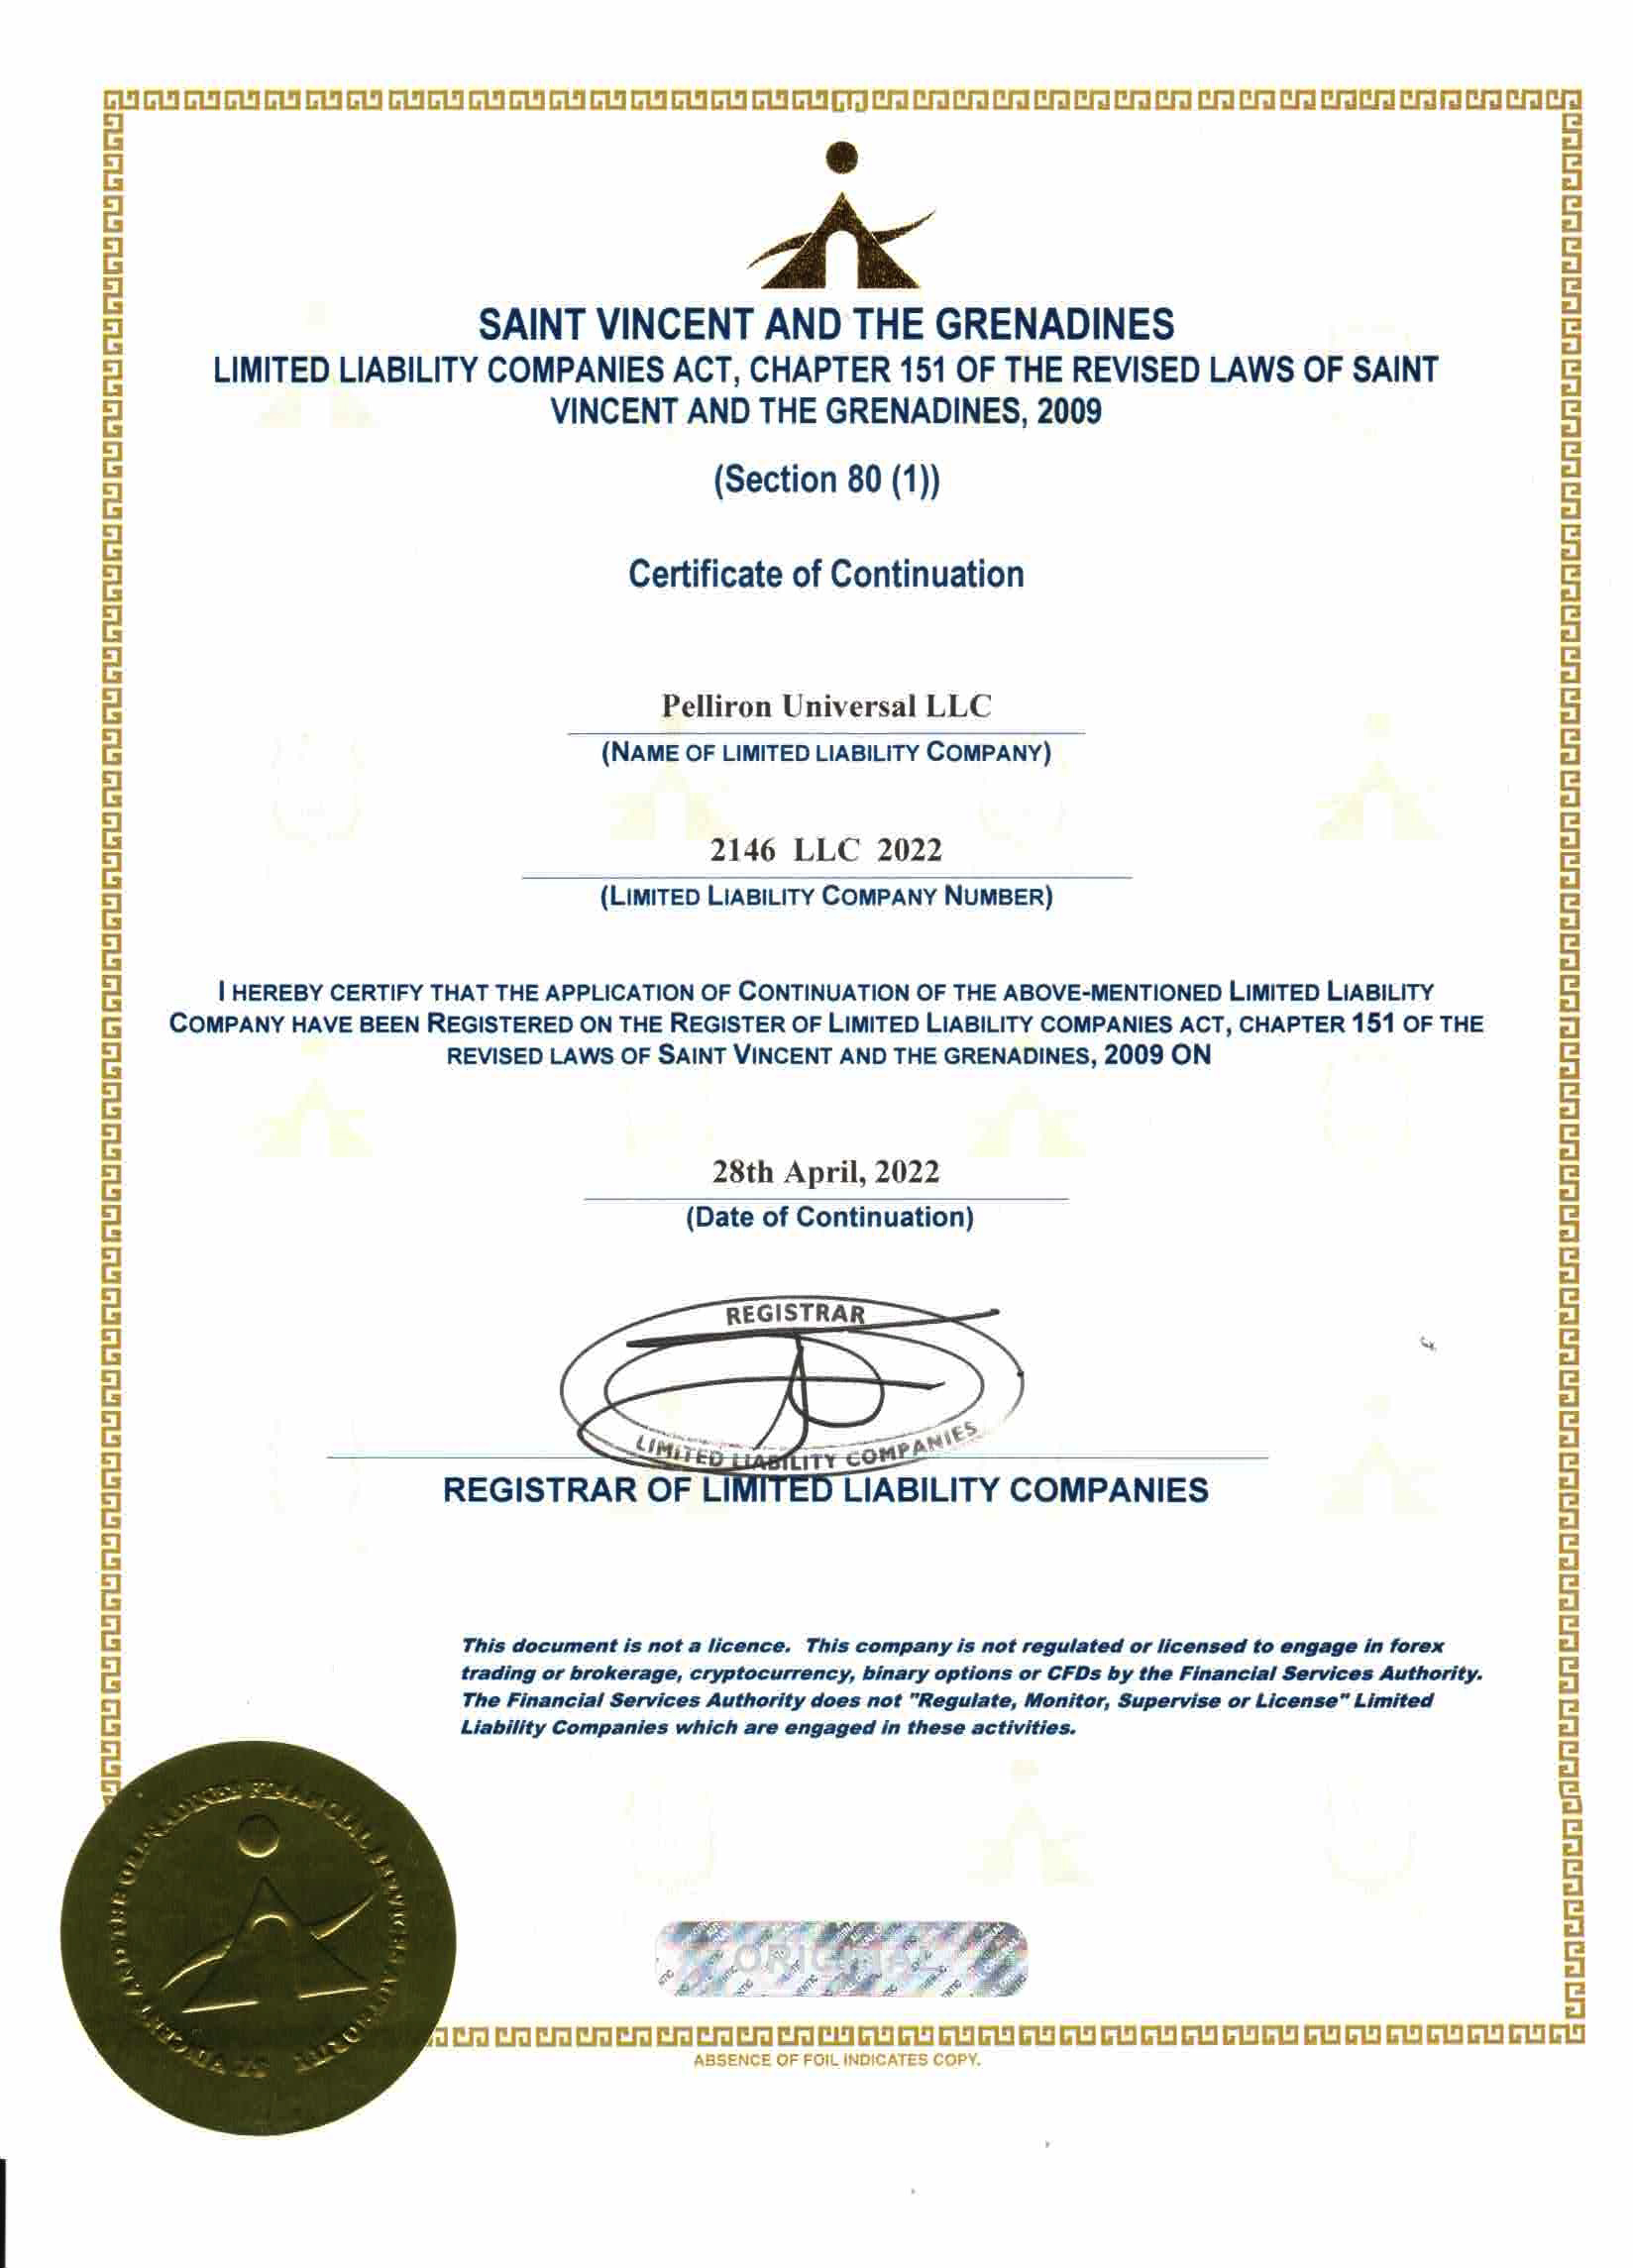 International Certificate